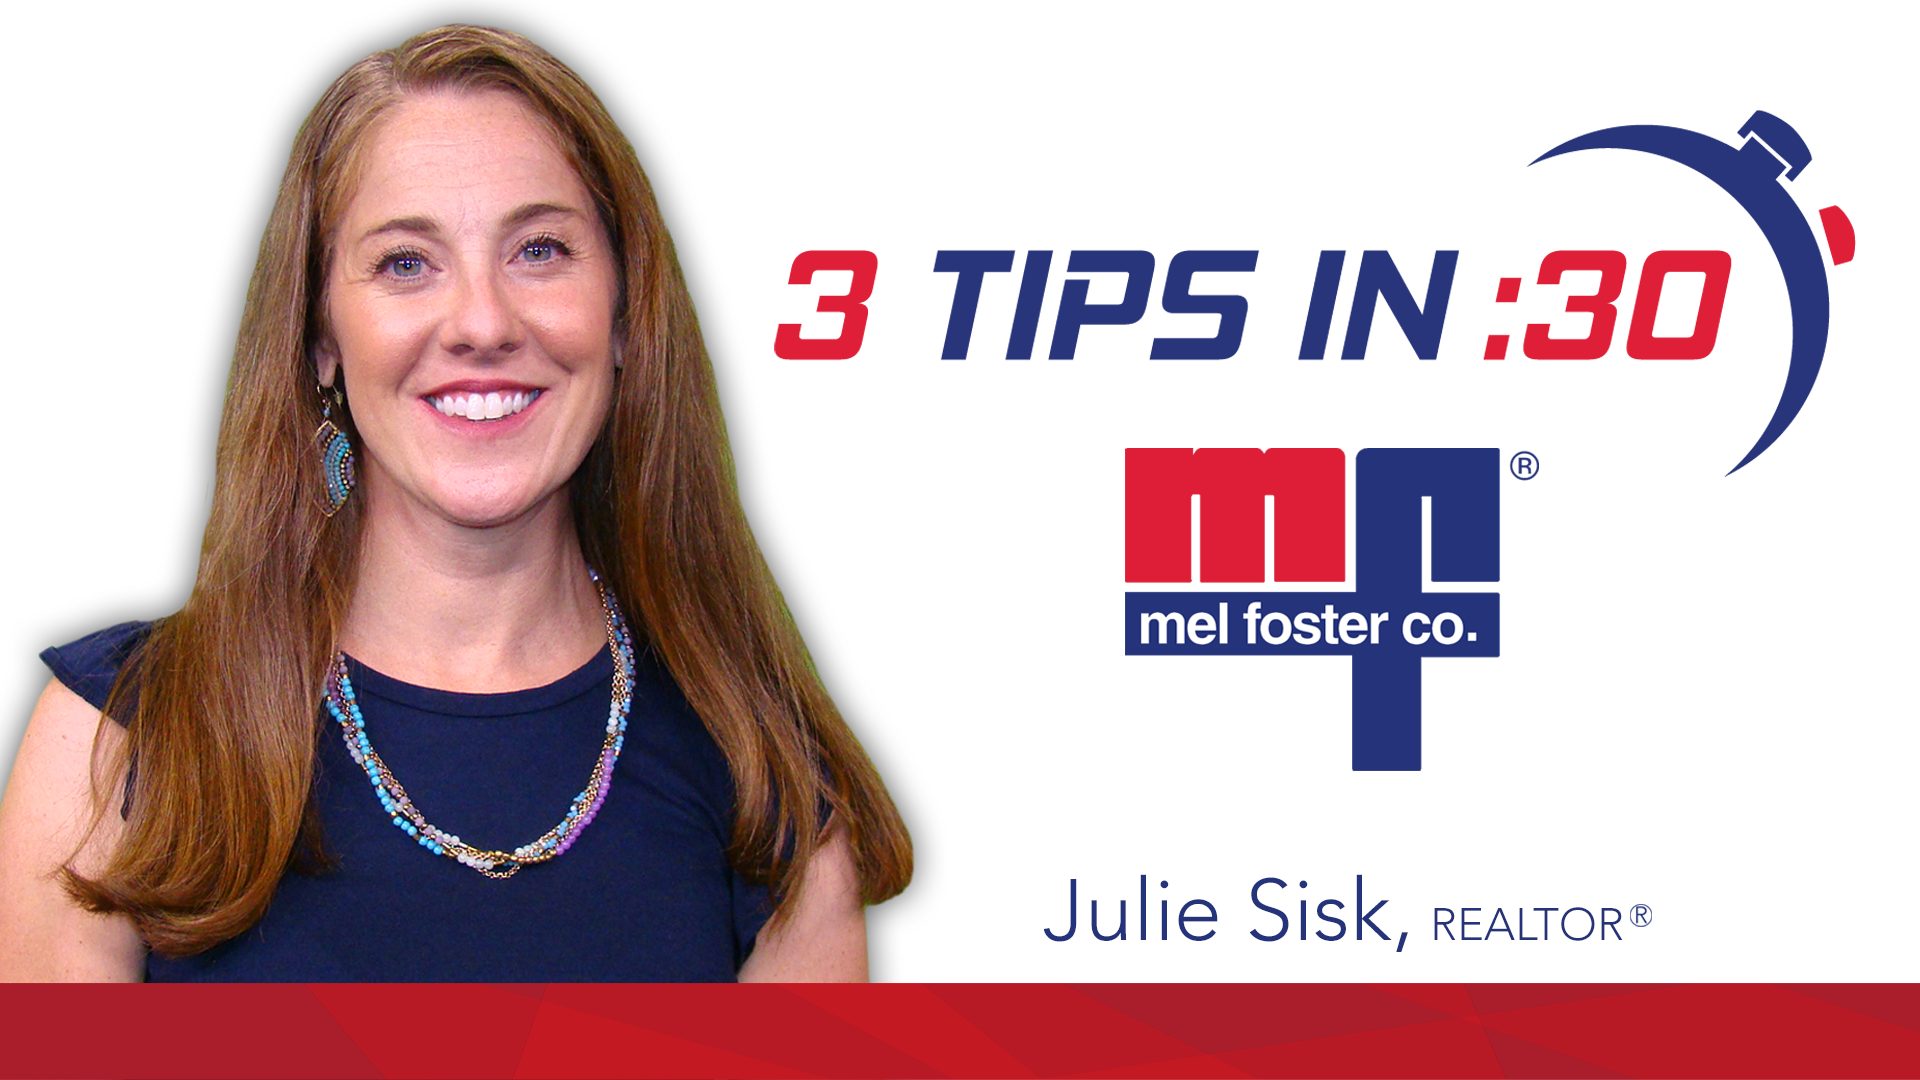 Julie Sisk, REALTOR® with Mel Foster Co. gives Tips in 30